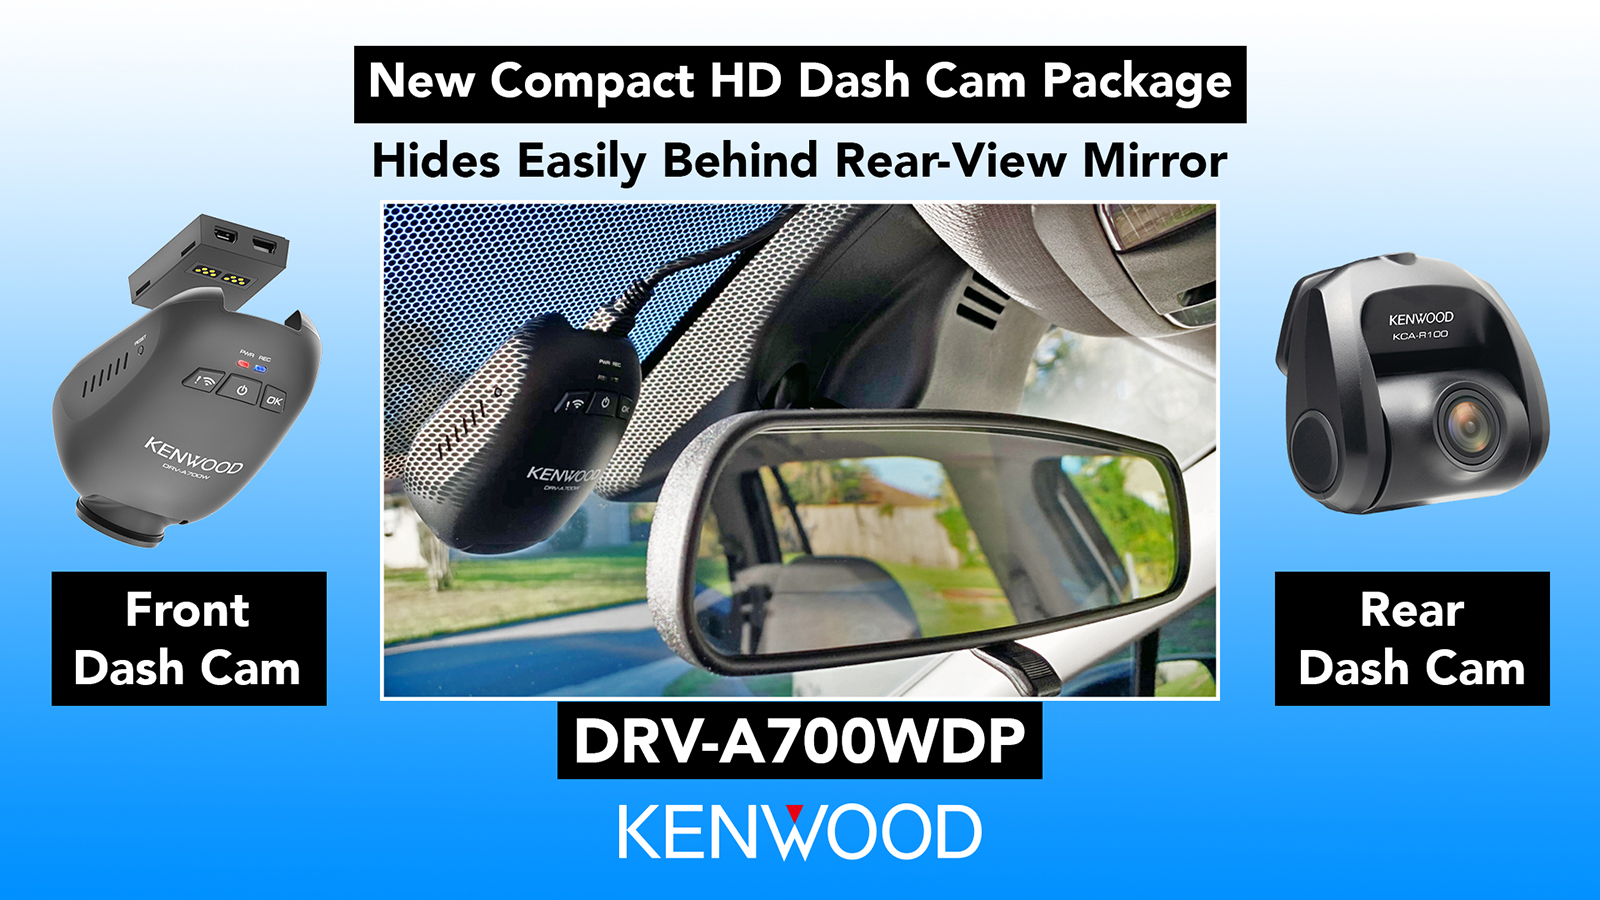 KENWOOD DRV A700WDP Compact Dash Cam CES Press Release Image 122019